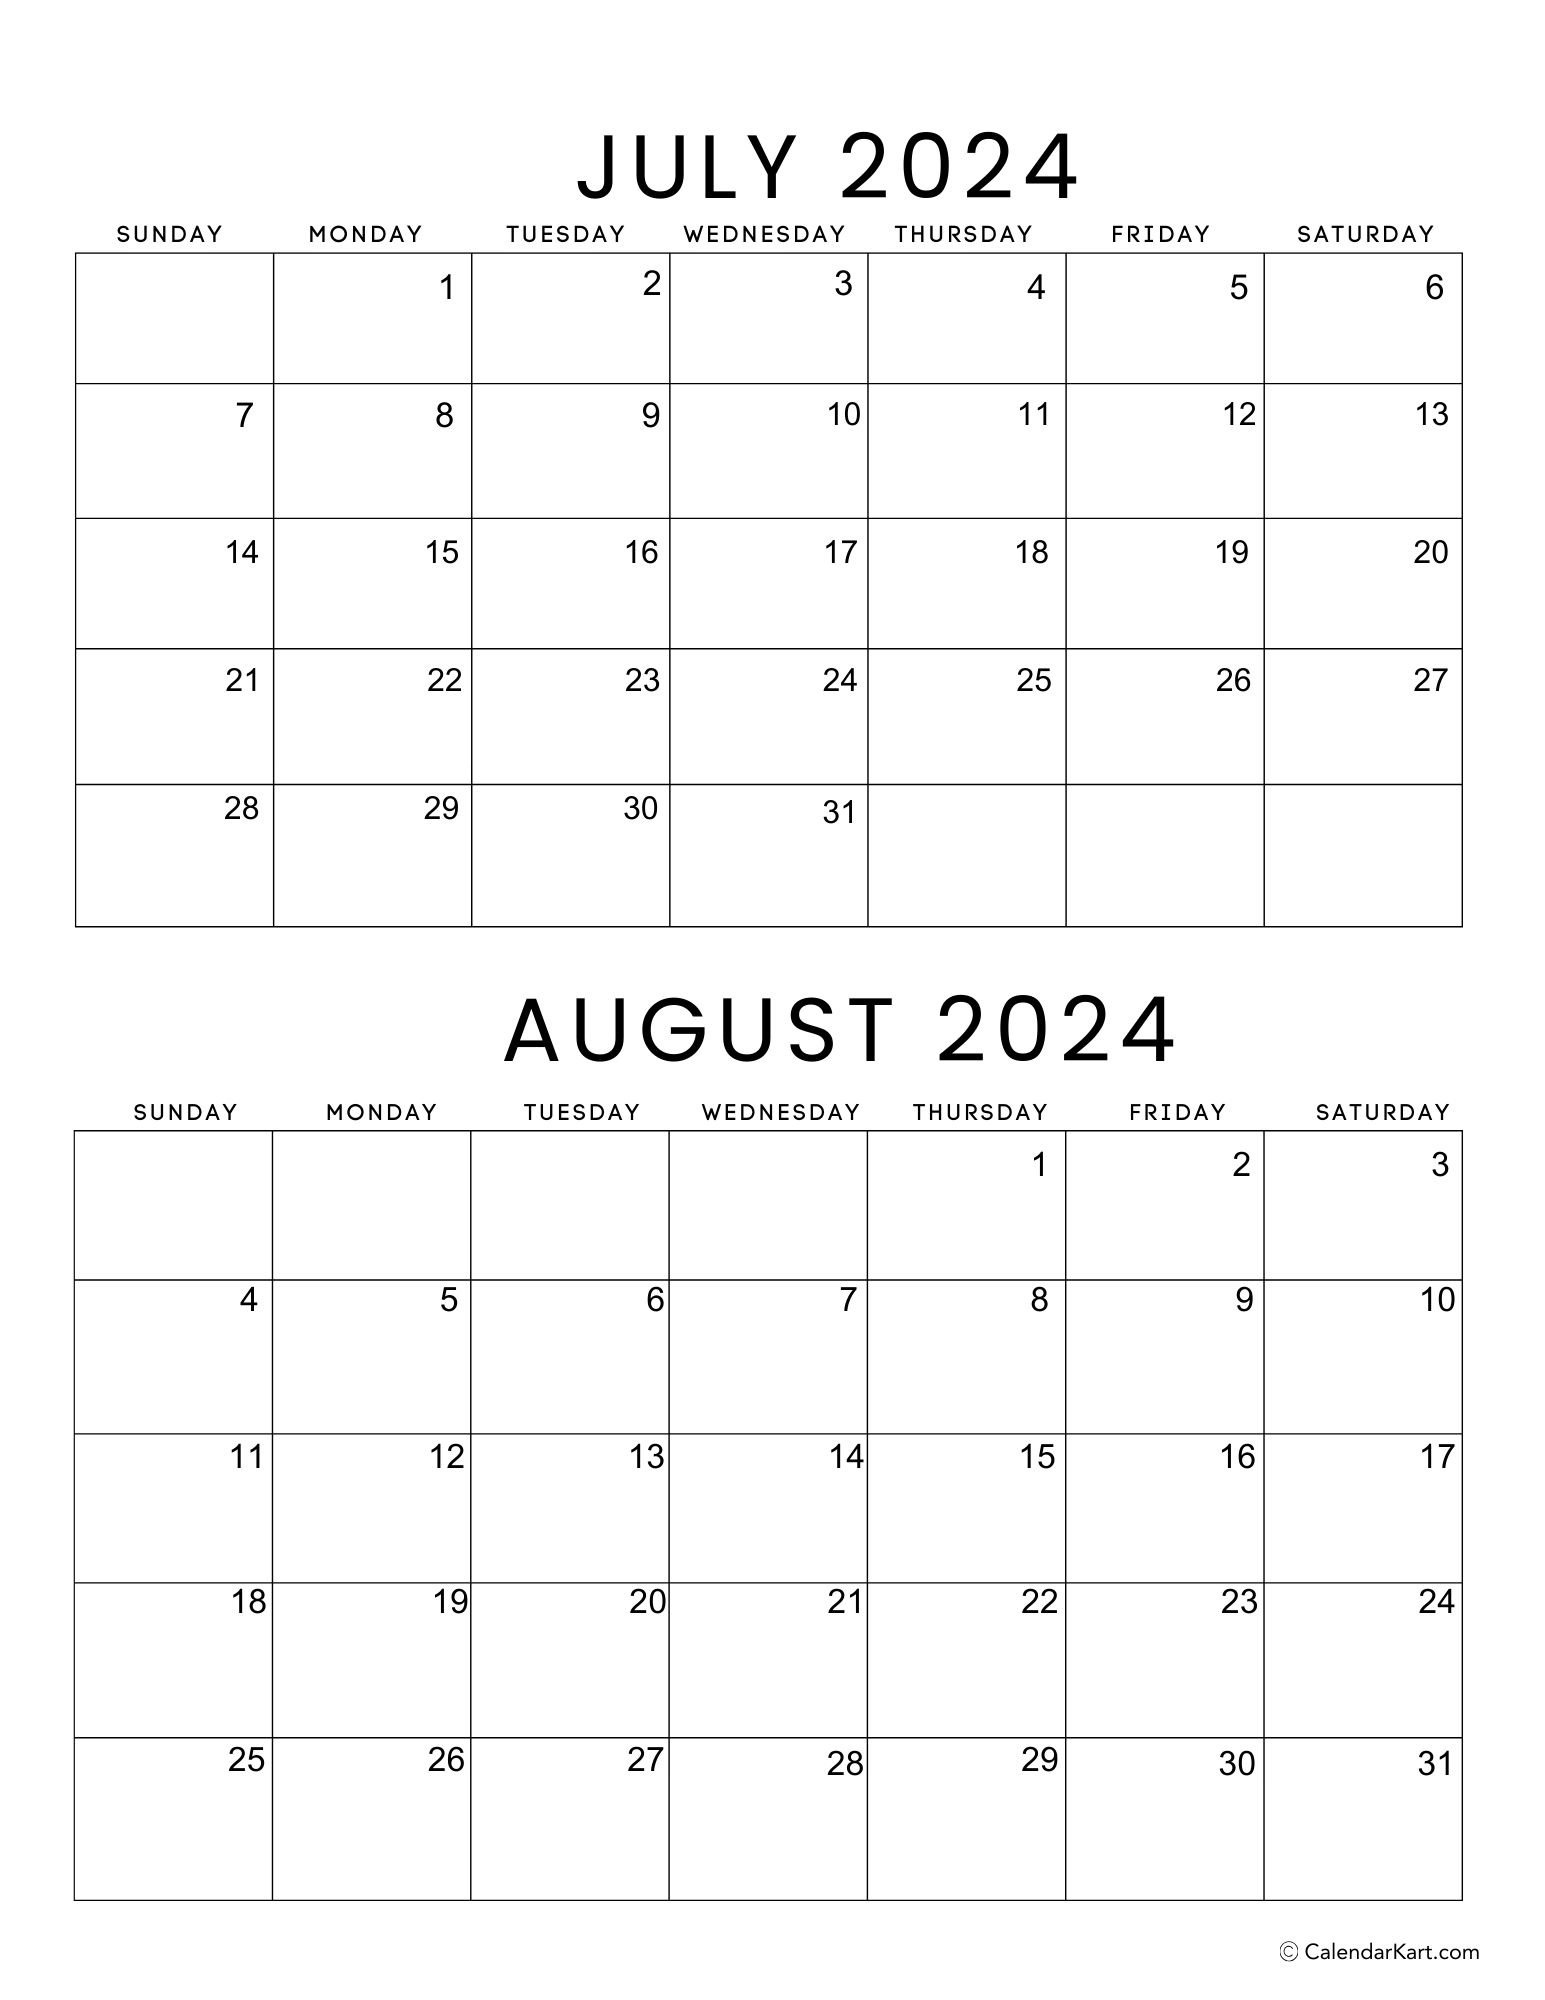 Printable July August 2024 Calendar | Calendarkart with 2024 Calendar July and August